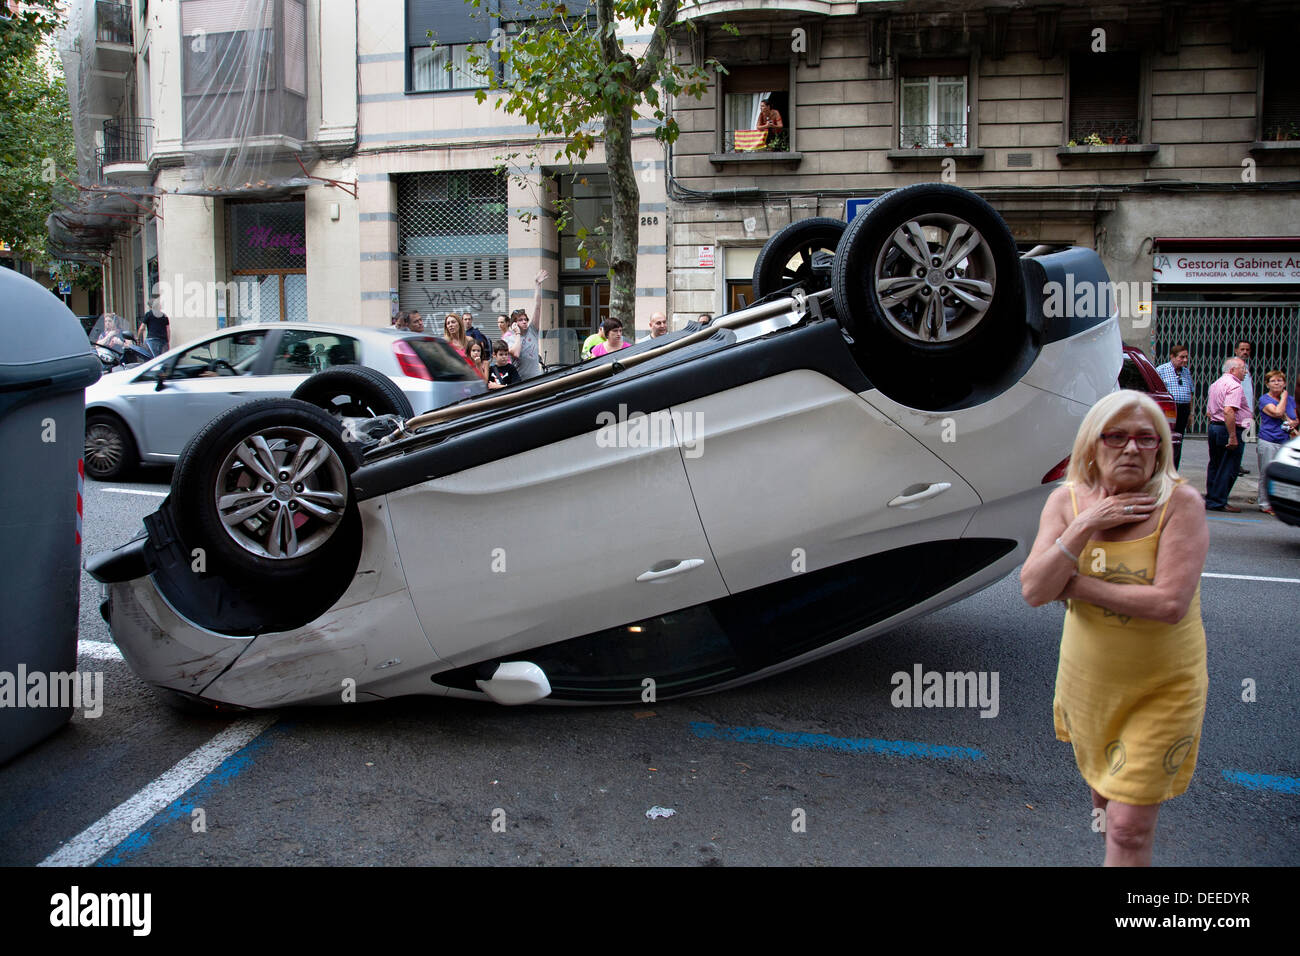 Car accident, Barcelona, Spain Stock Photo - Alamy